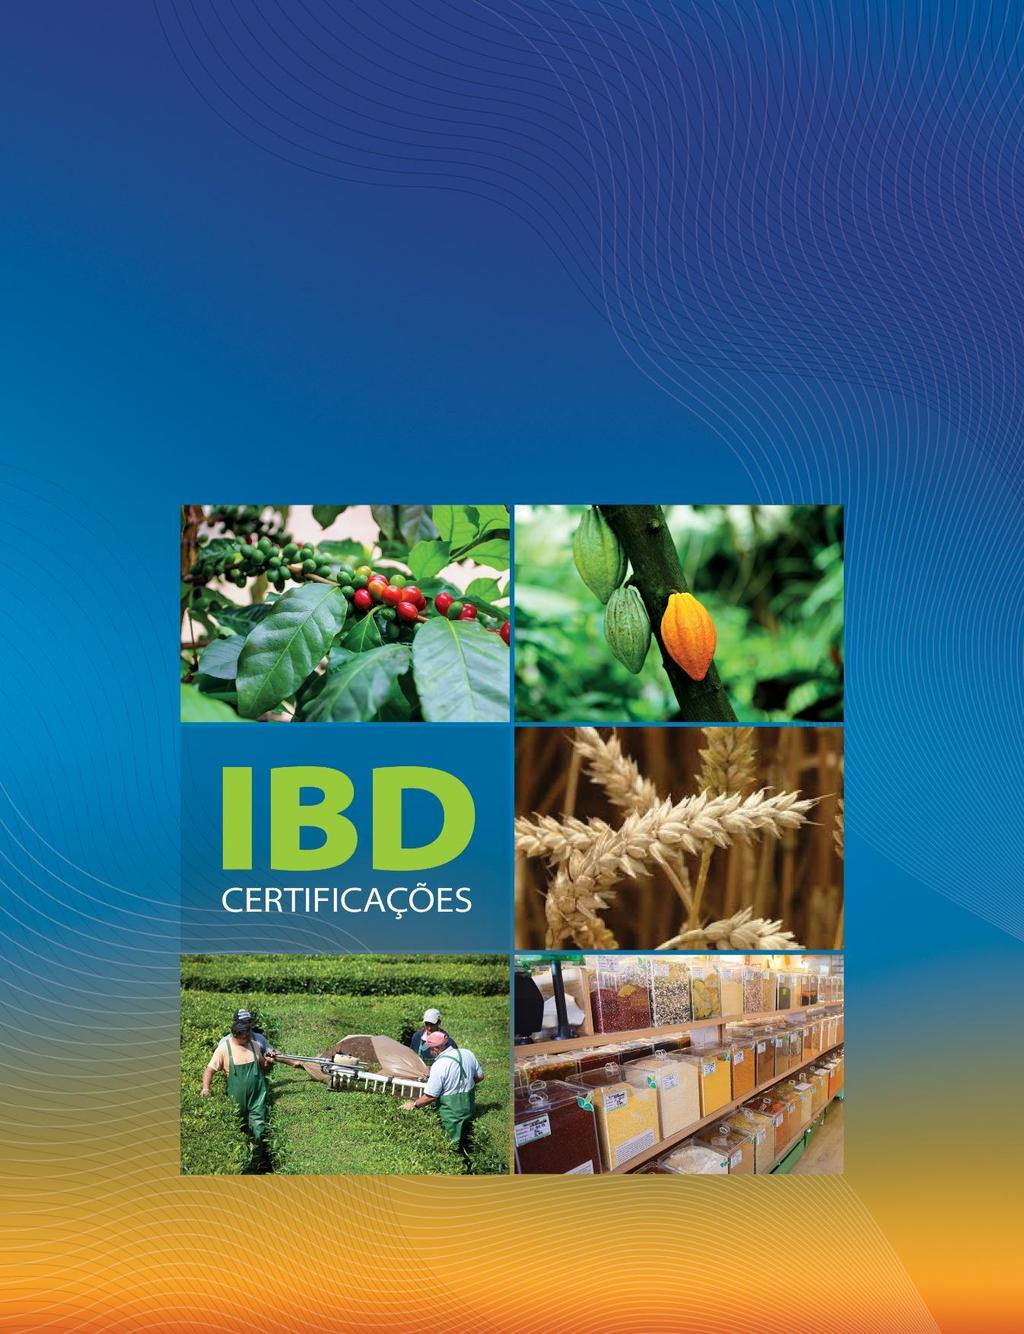 IBD CERTIFICAÇÕES Fair Trade Certification Step by step Welcome to IBD!